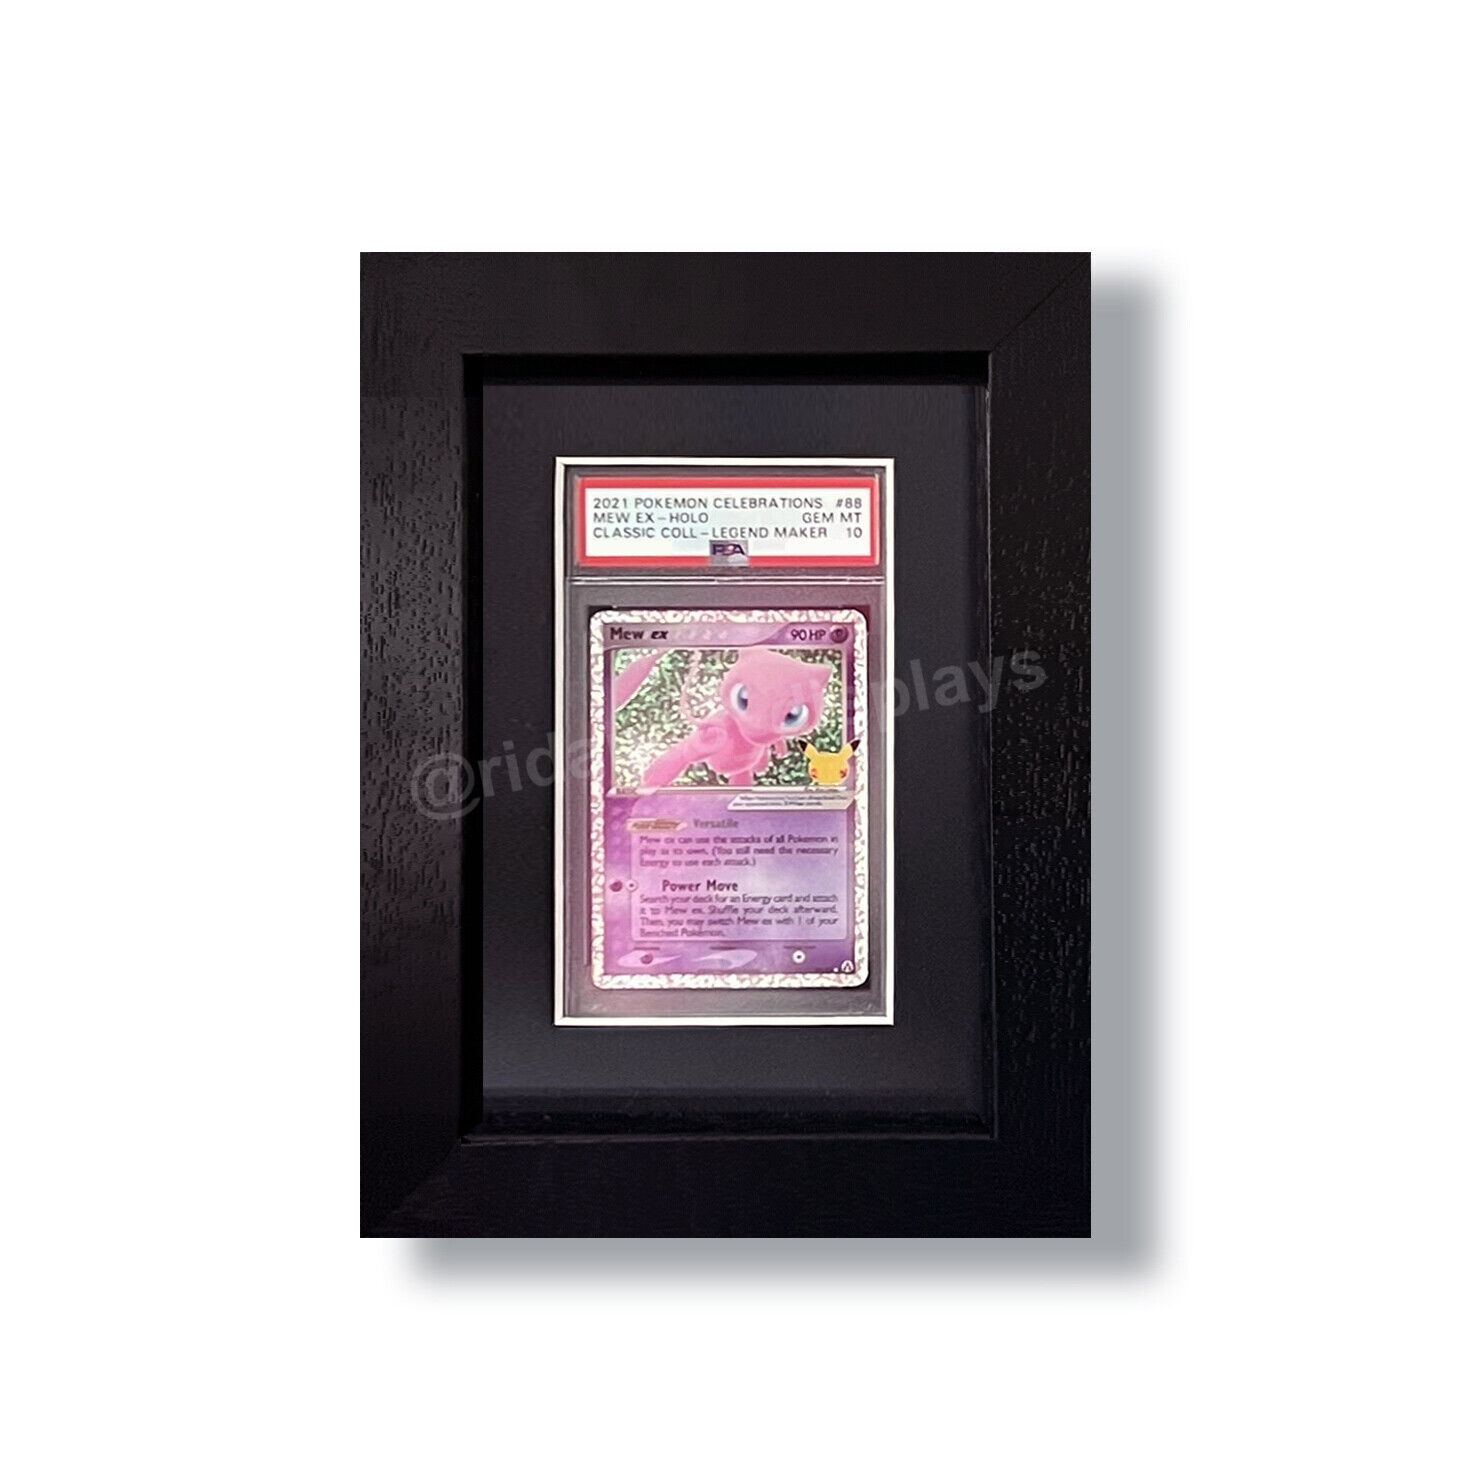 Ridanco PSA Card Display Frames, UV Protective, Made in UK, Graded Slab Wall CGC